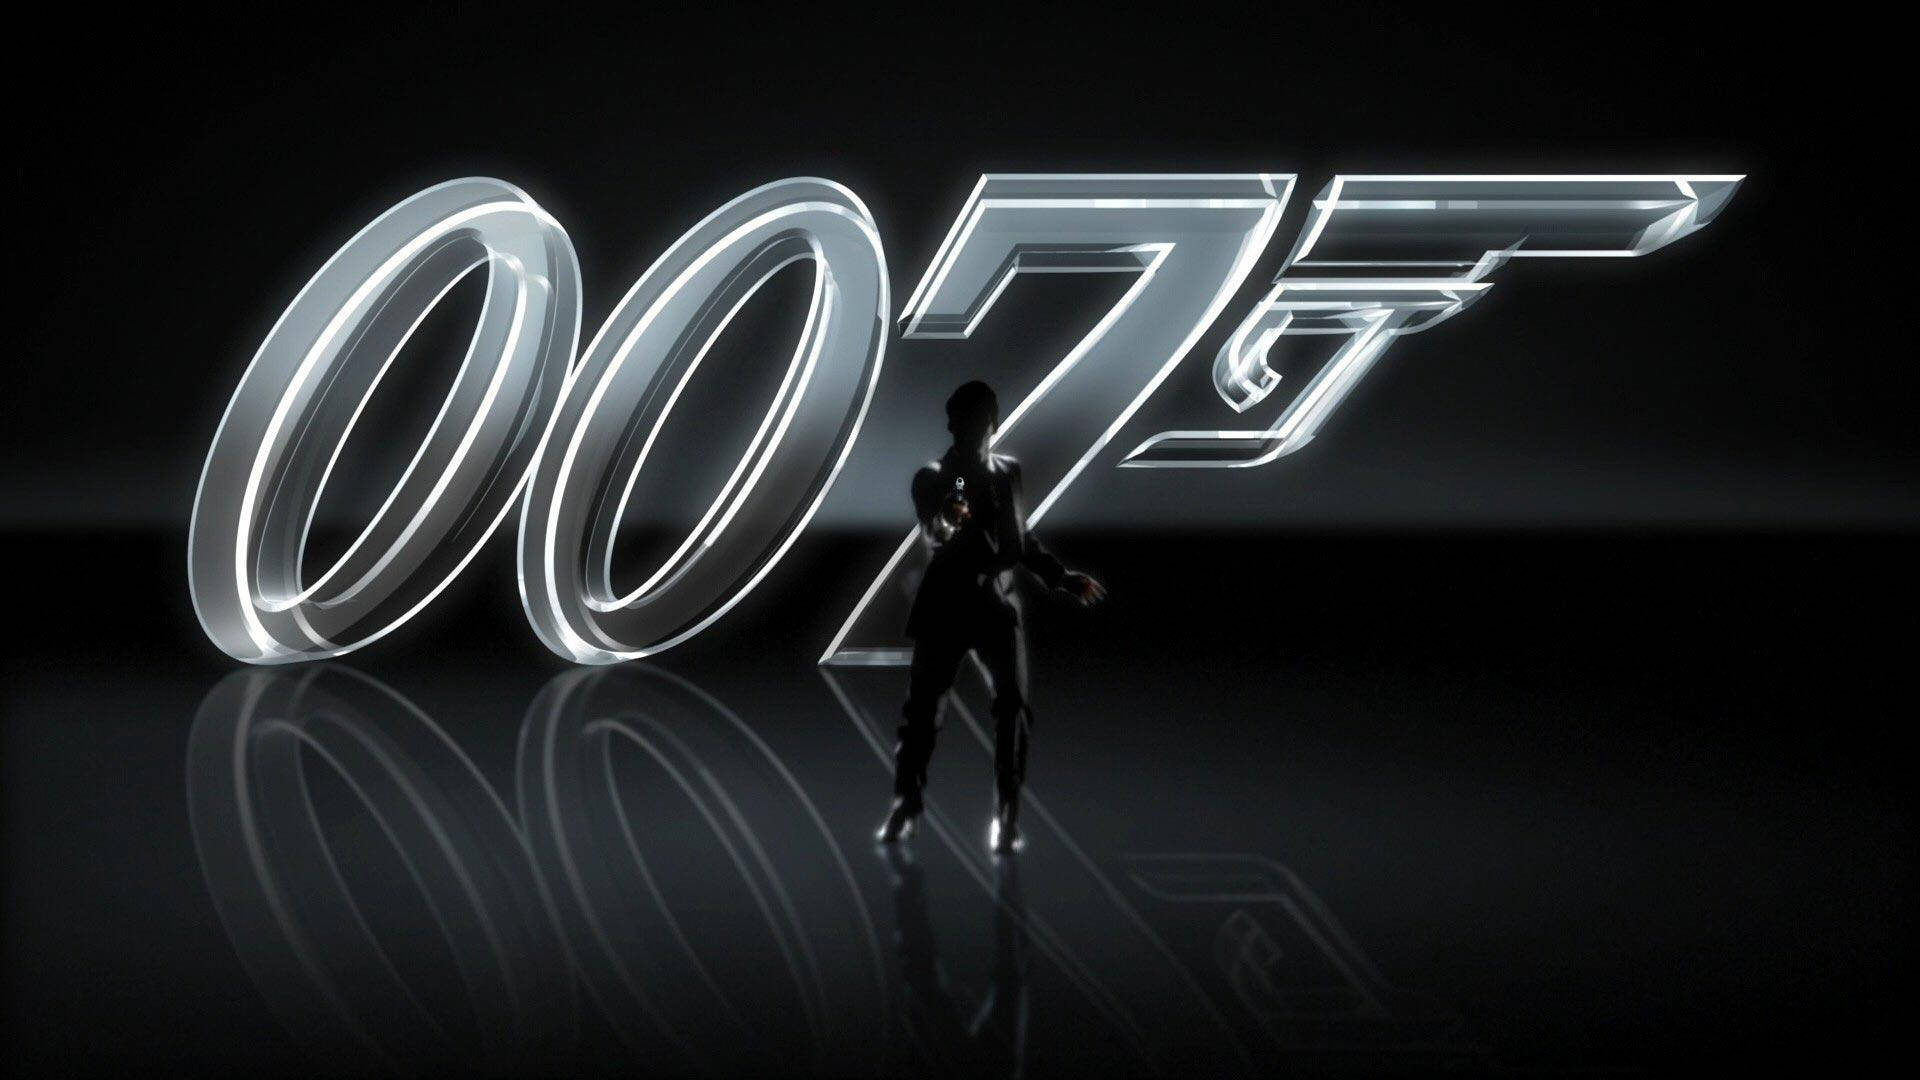 James Bond 007 Film